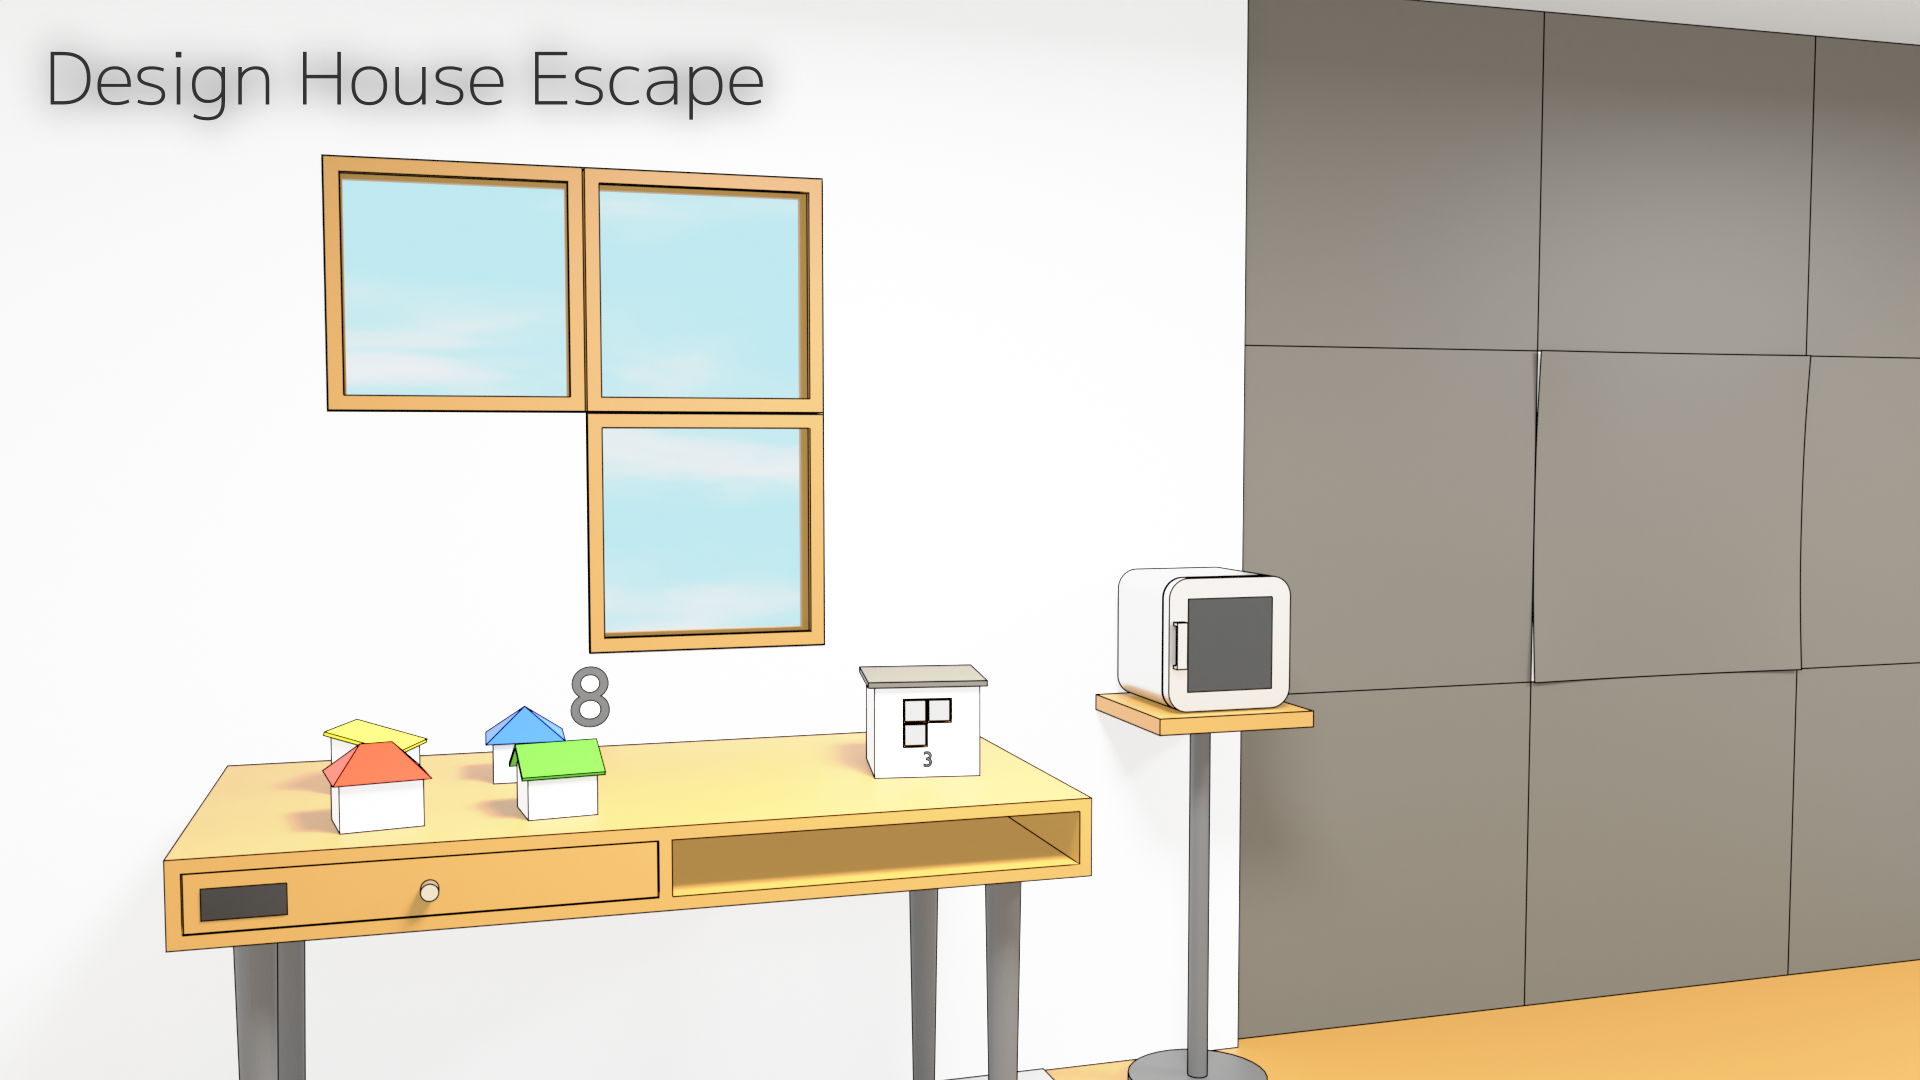 Design House Escape Game Image